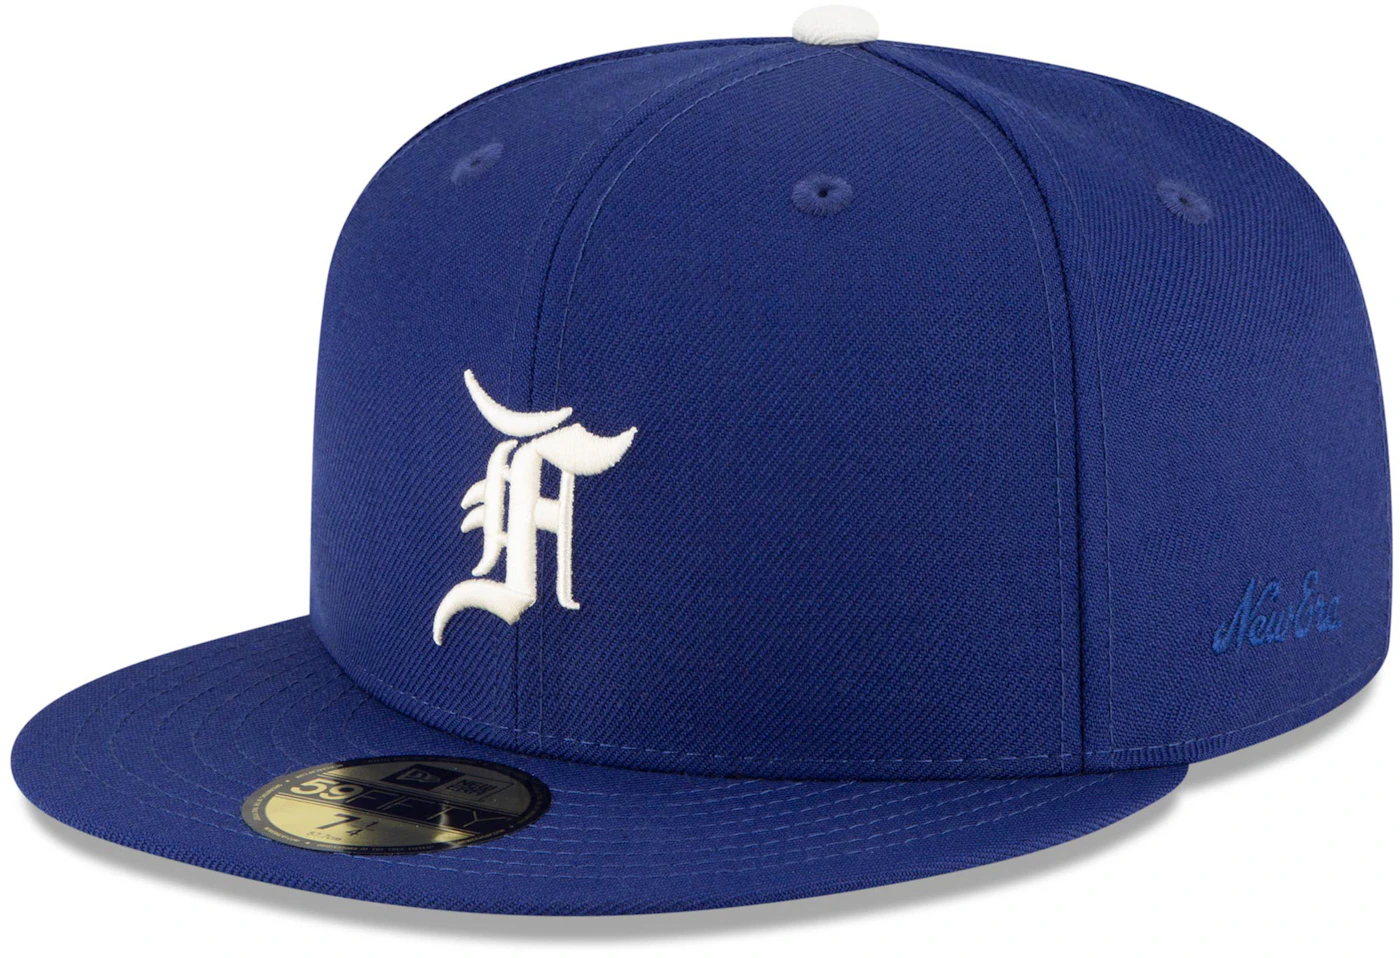 Fear of God MLB New Era Royal 59FIFTY Cap Blue